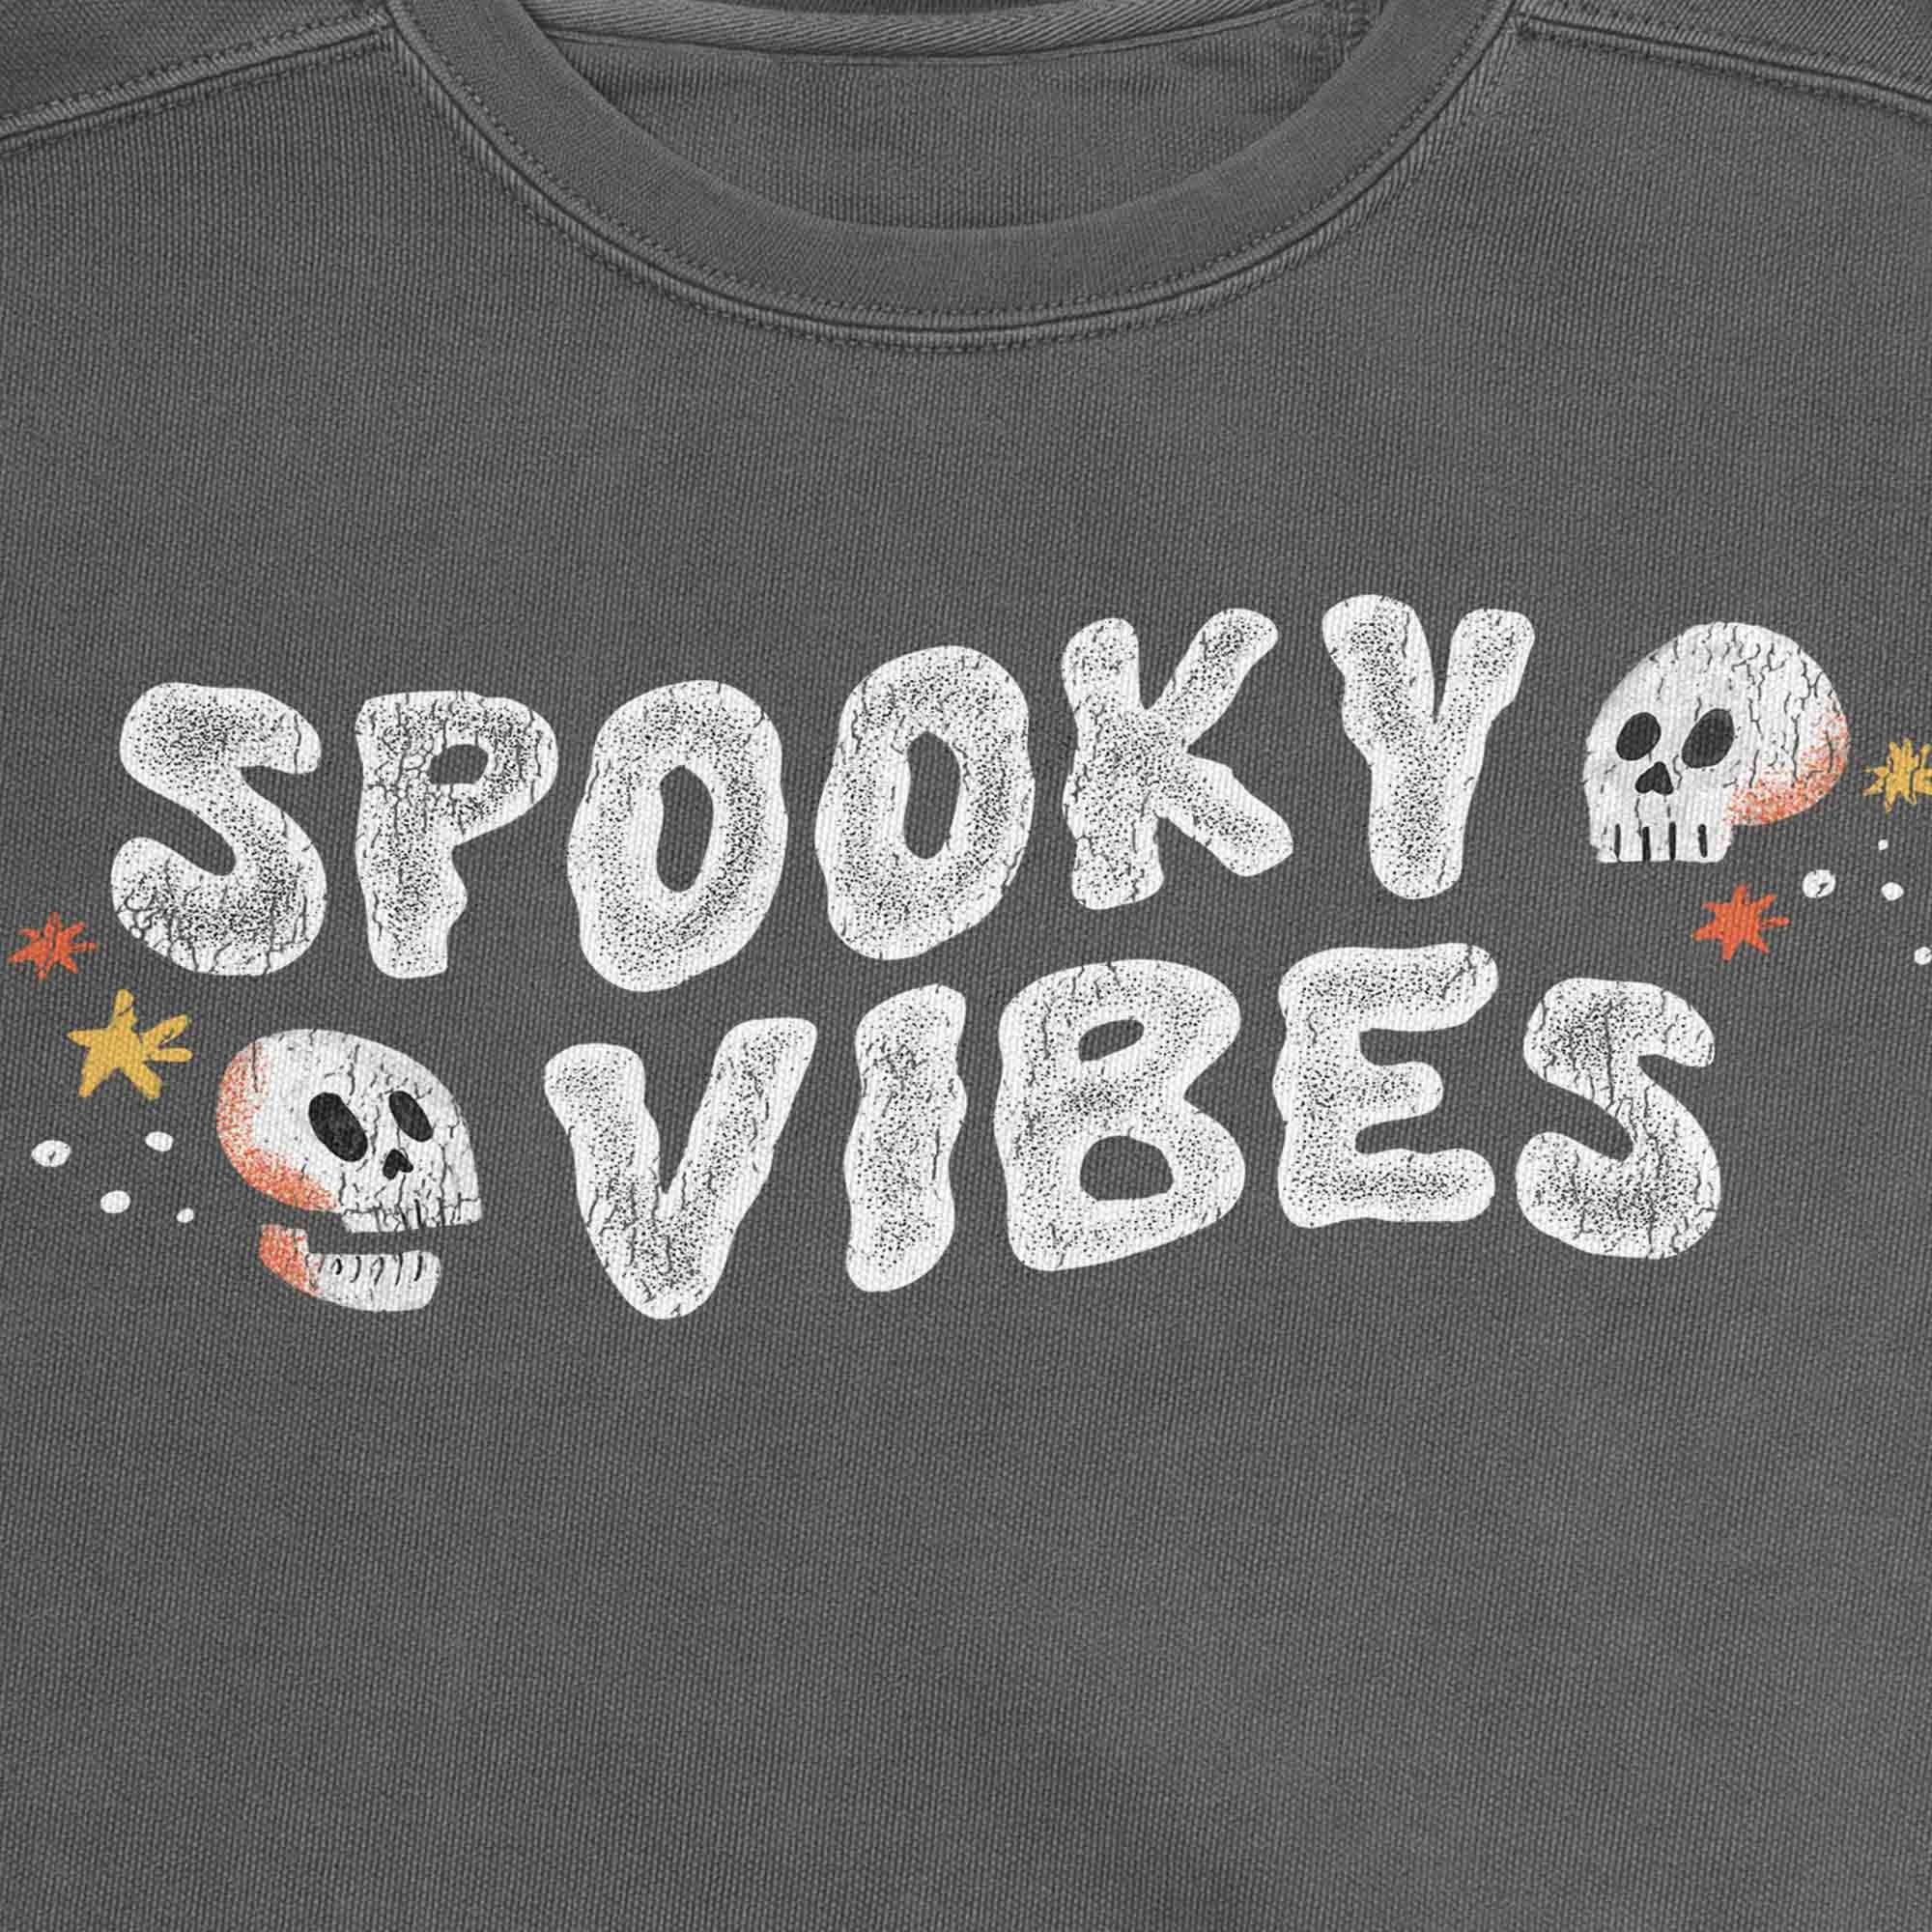 Spooky Vibes Halloween crewneck sweatshirt with Skulls on Garment Dyed Grey Crewneck Sweatshirt made by Nurtured by Nature Studio